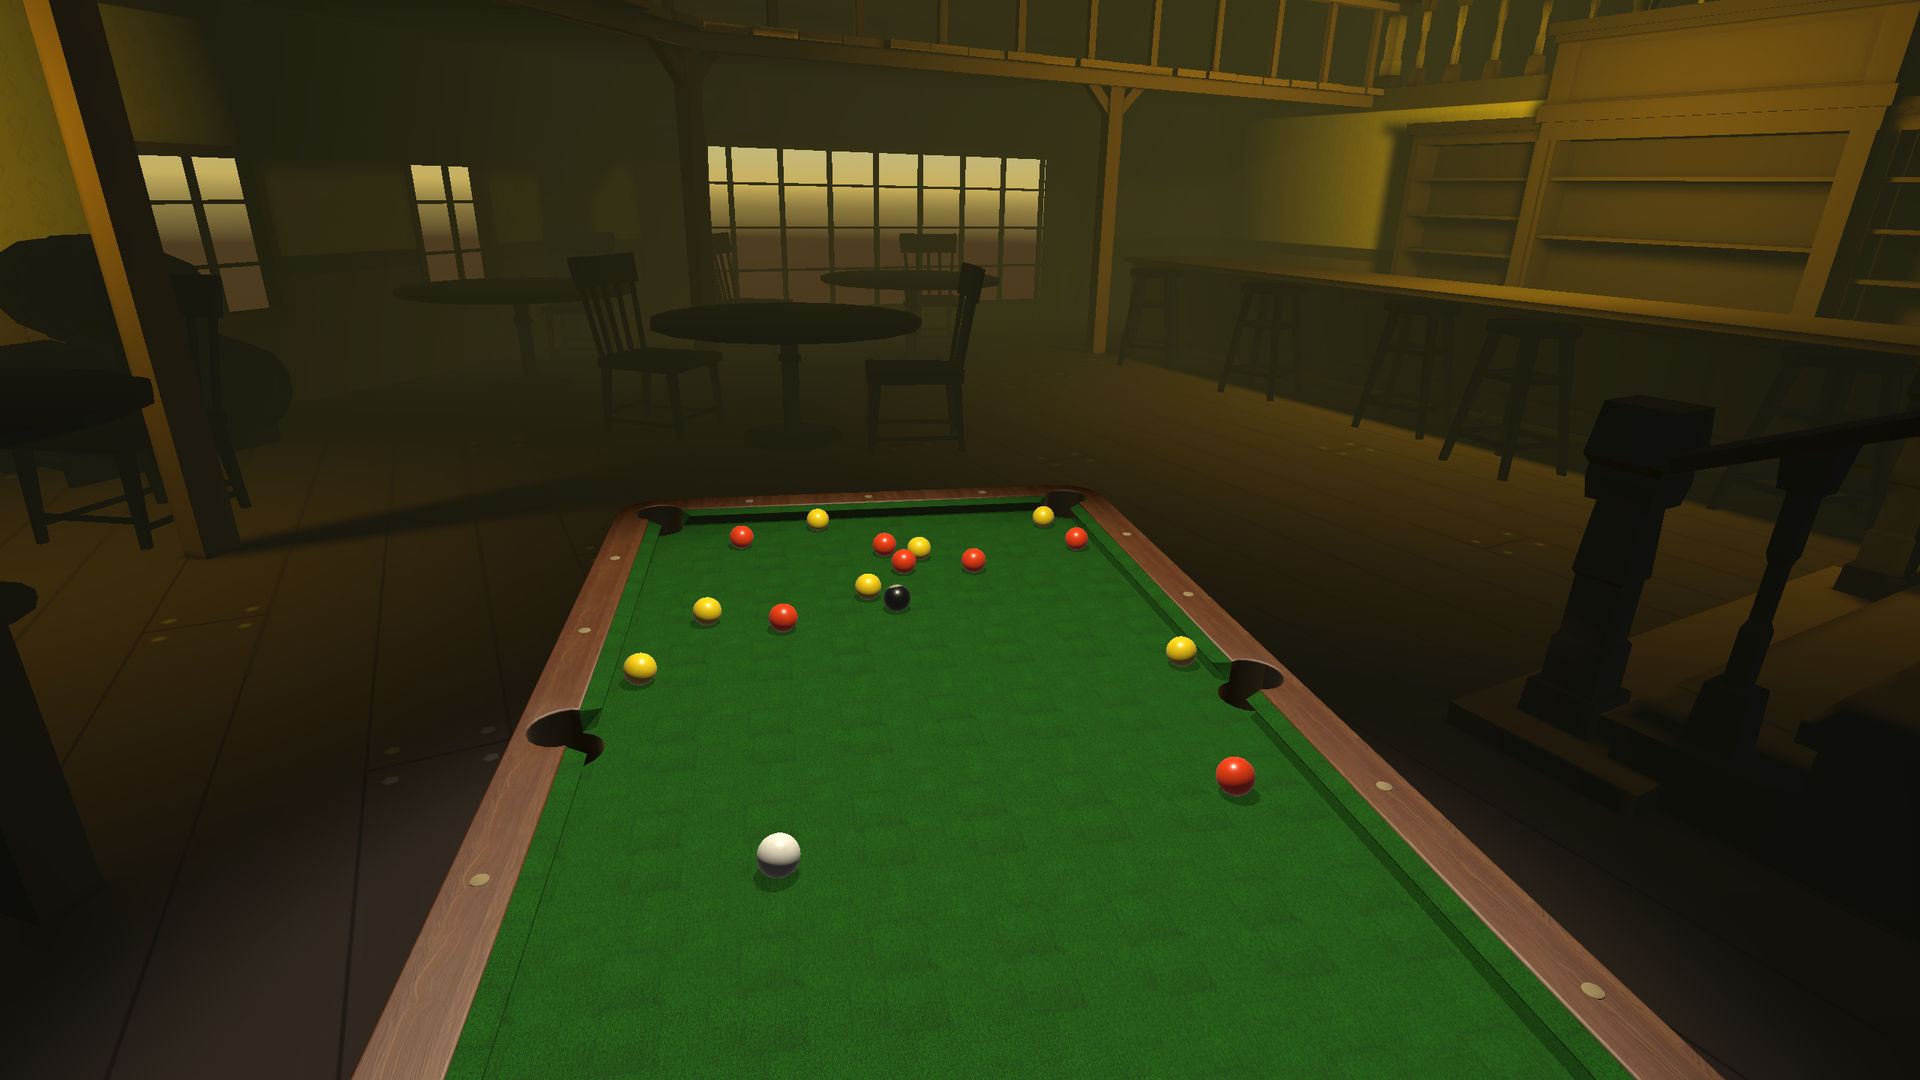 Killer 3D Pool - Metacritic